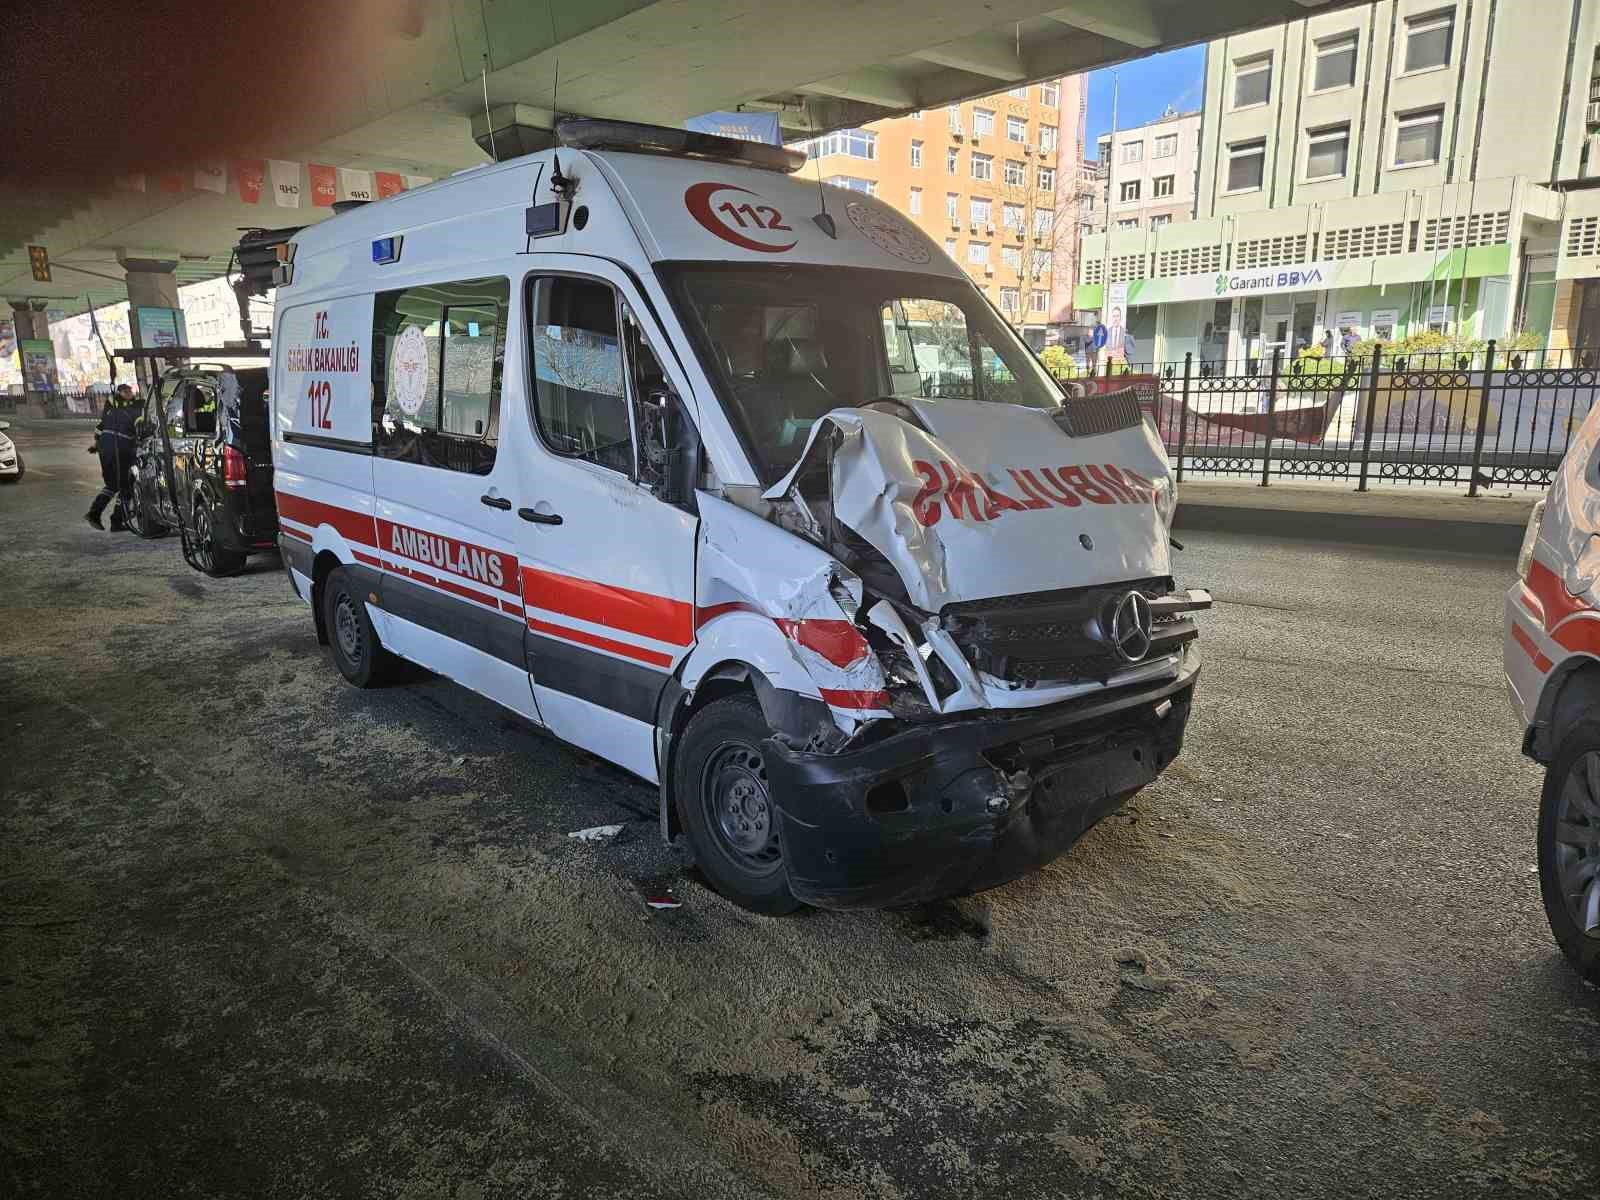 mecidiyekoyde hatali donus yapan minibusle hastaya yetismeye calisan ambulans carpisti 0